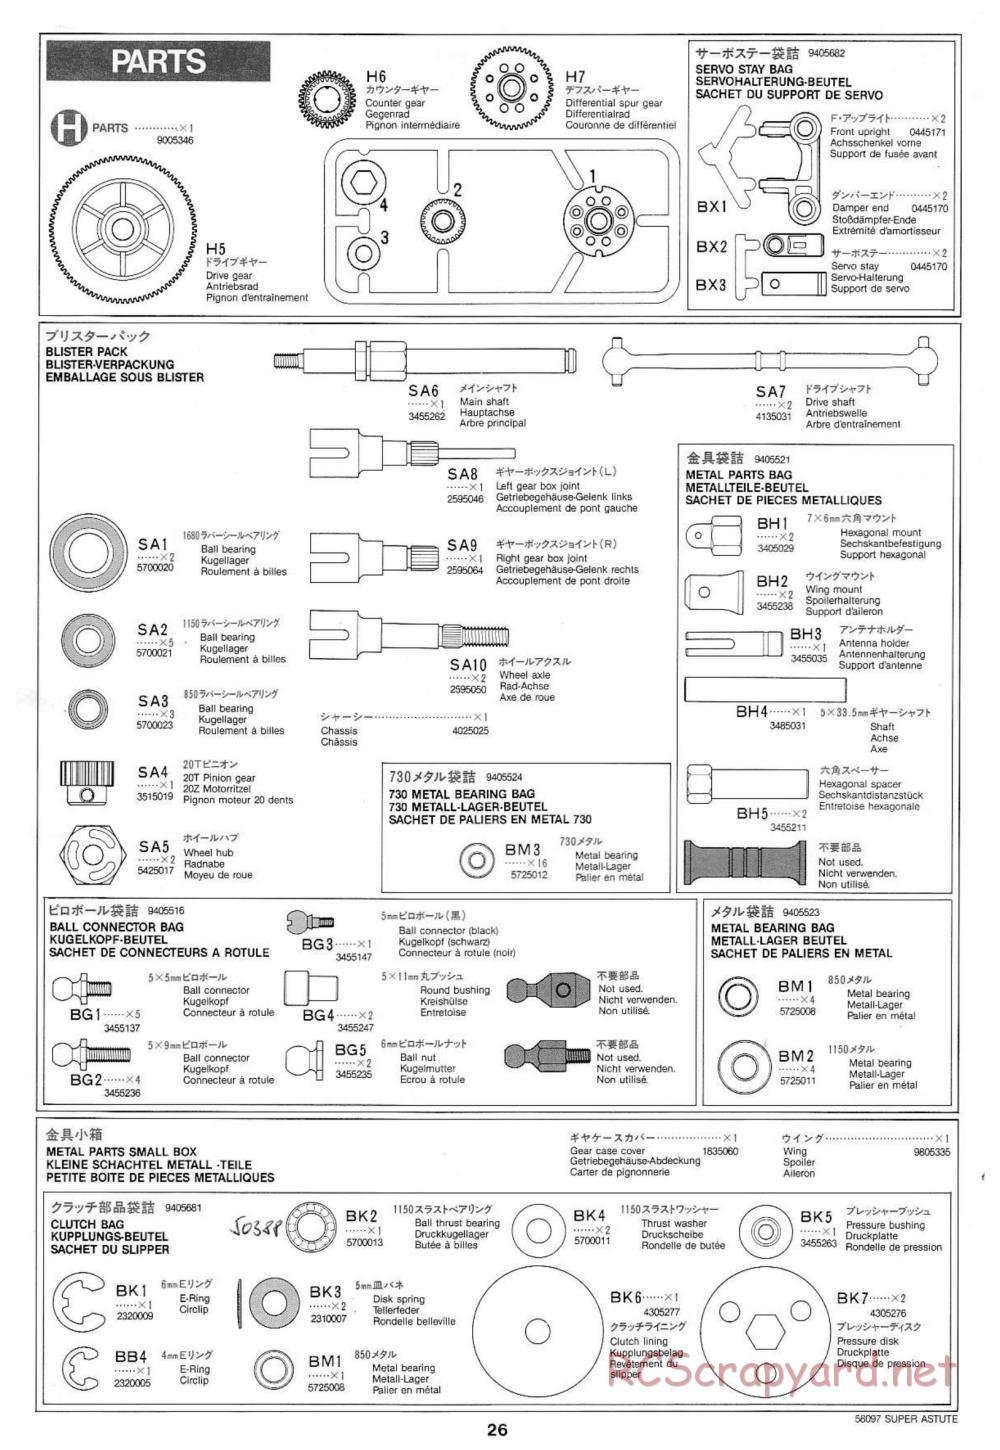 Tamiya - Super Astute - 58097 - Manual - Page 26